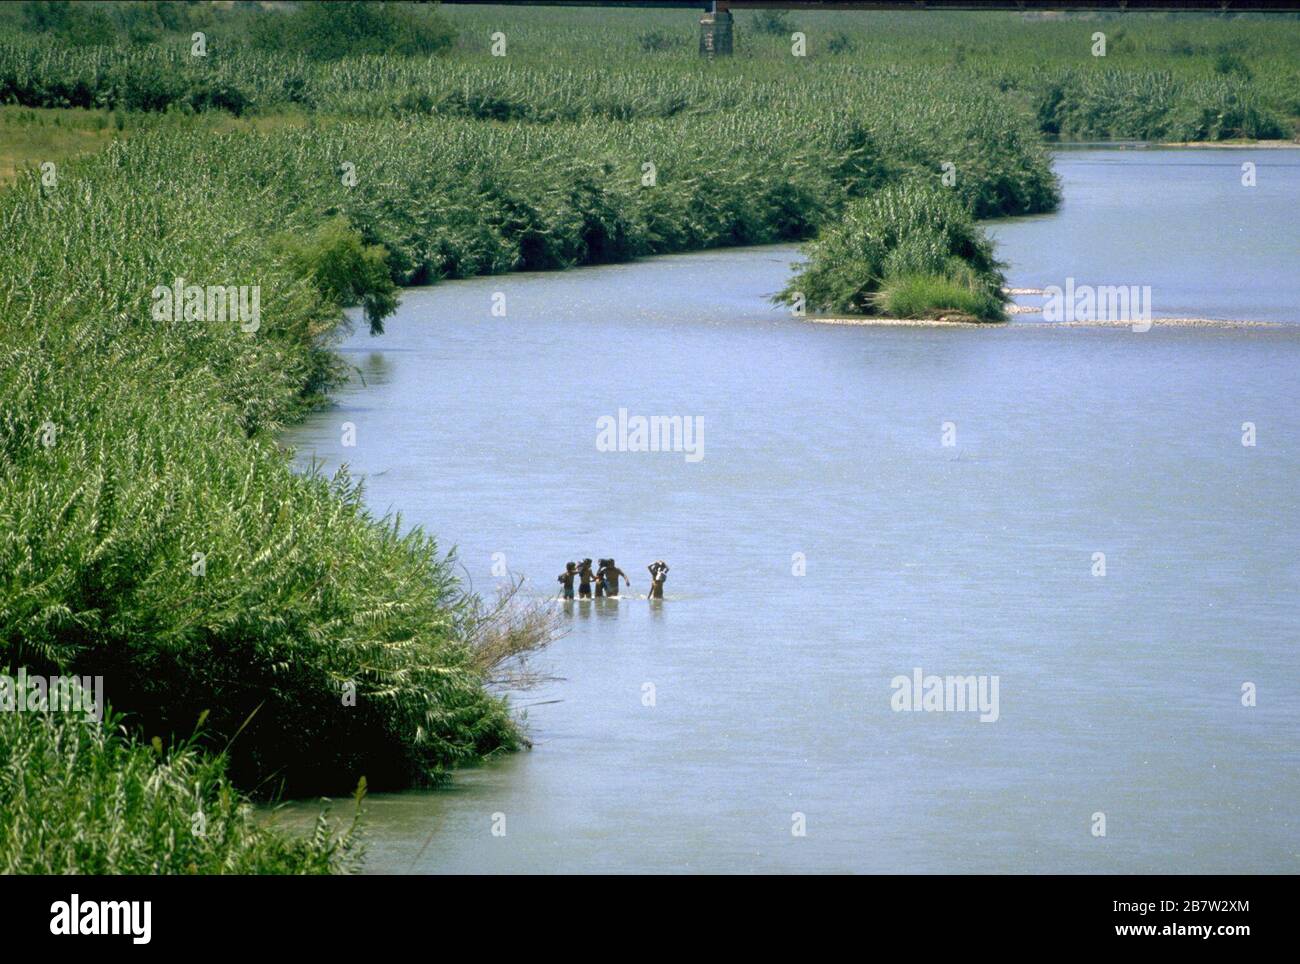 Laredo Texas USA: Migrants wading into the Rio Grande on the Mexican side ready to cross illegally into the United States near Laredo.   ©Bob Daemmrich Stock Photo